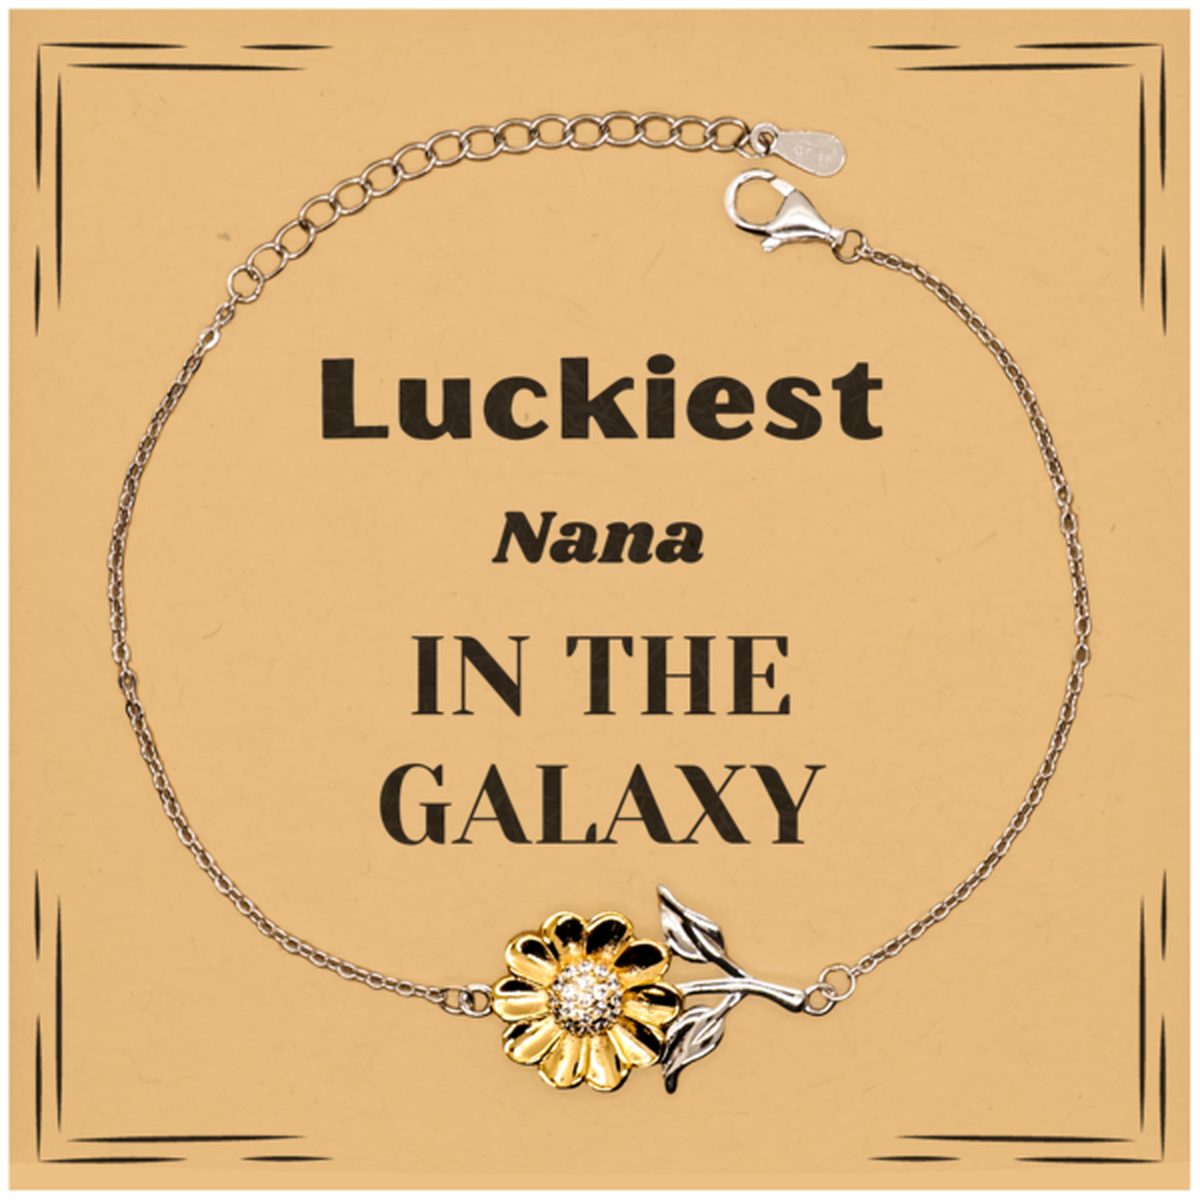 Luckiest Nana in the Galaxy, To My Nana Message Card Gifts, Christmas Nana Sunflower Bracelet Gifts, X-mas Birthday Unique Gifts For Nana Men Women